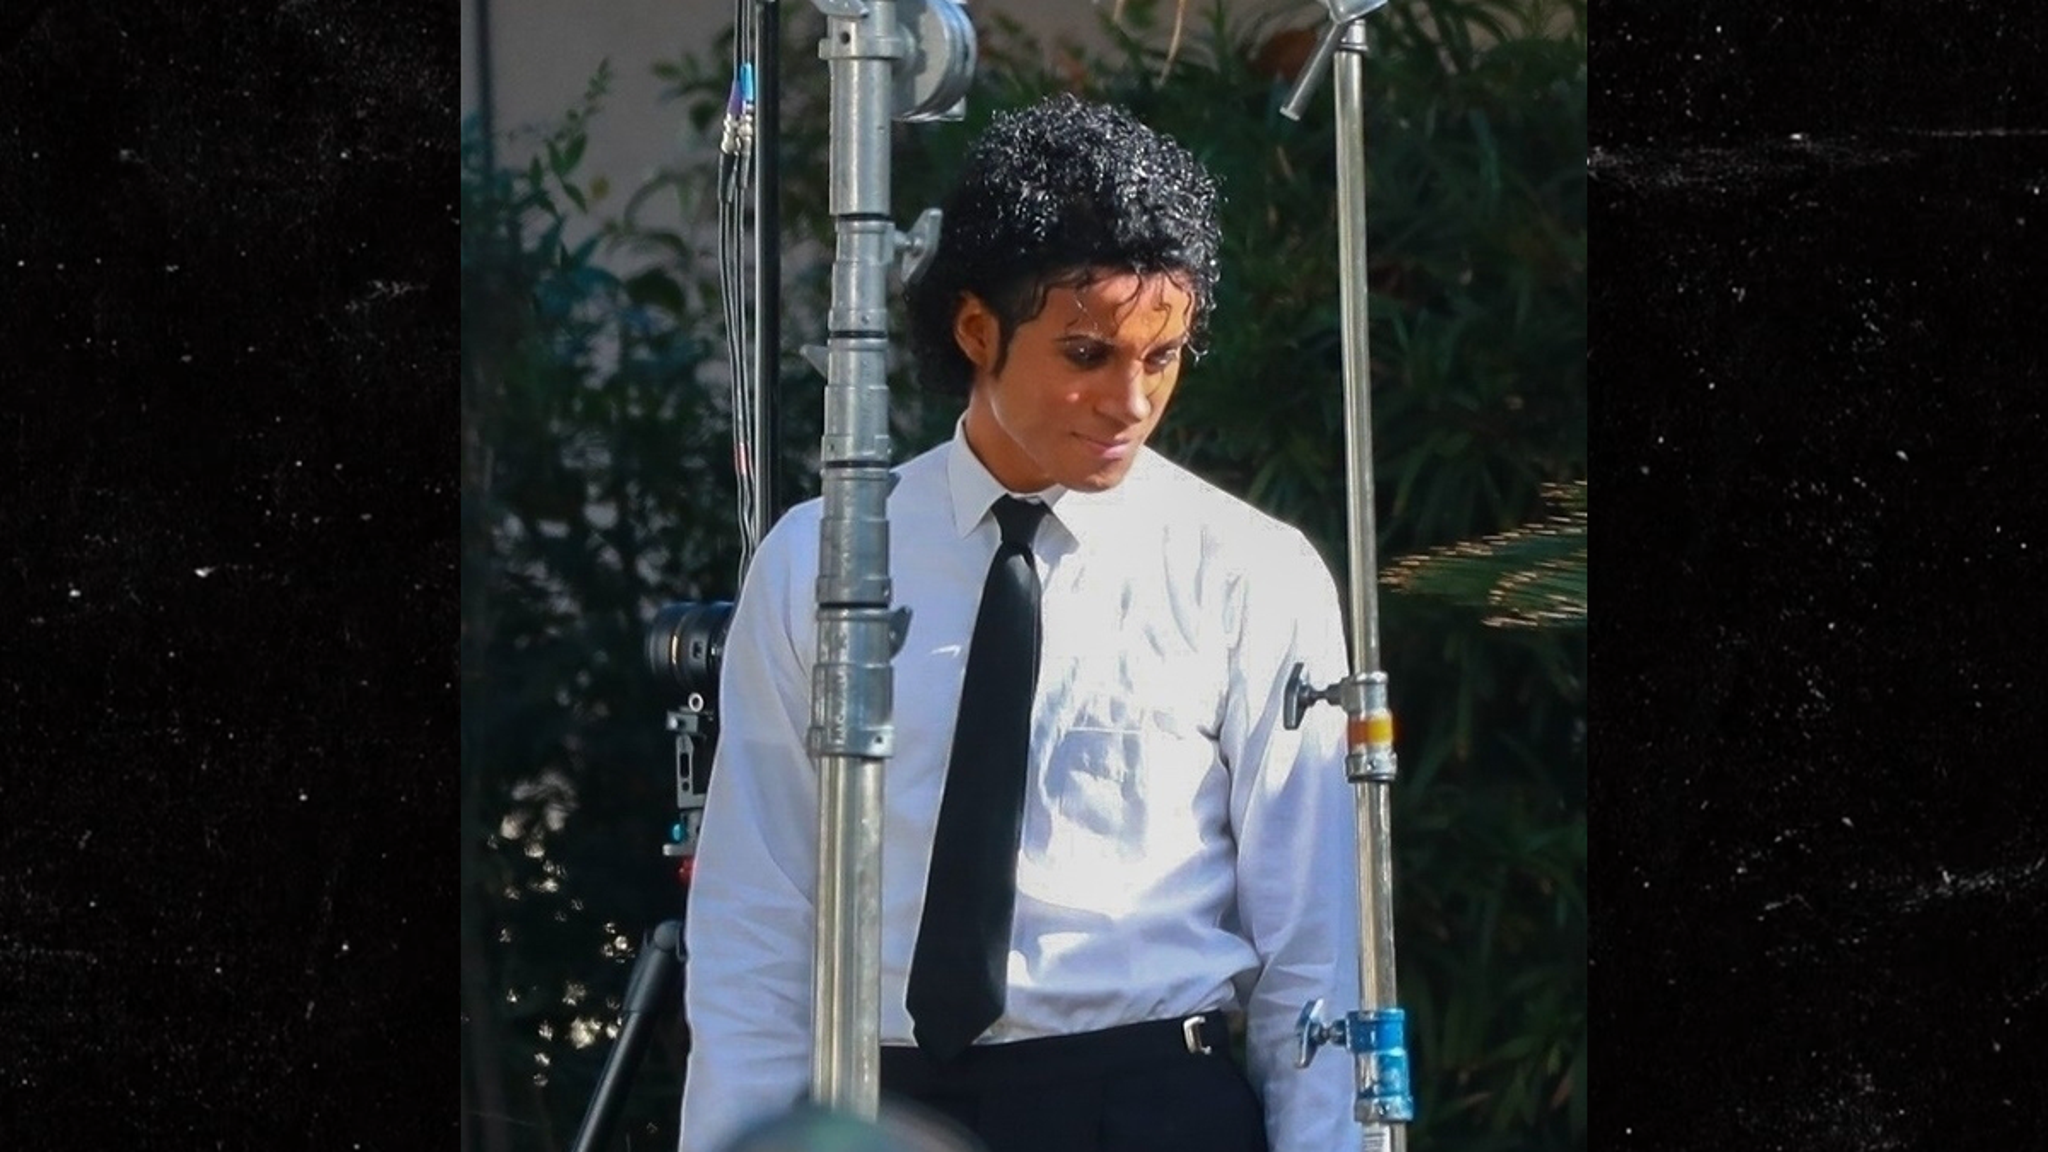 Image for article Michael Jacksons Nephew Jaafar In Full Costume As King of Pop On Biopic Set  TMZ